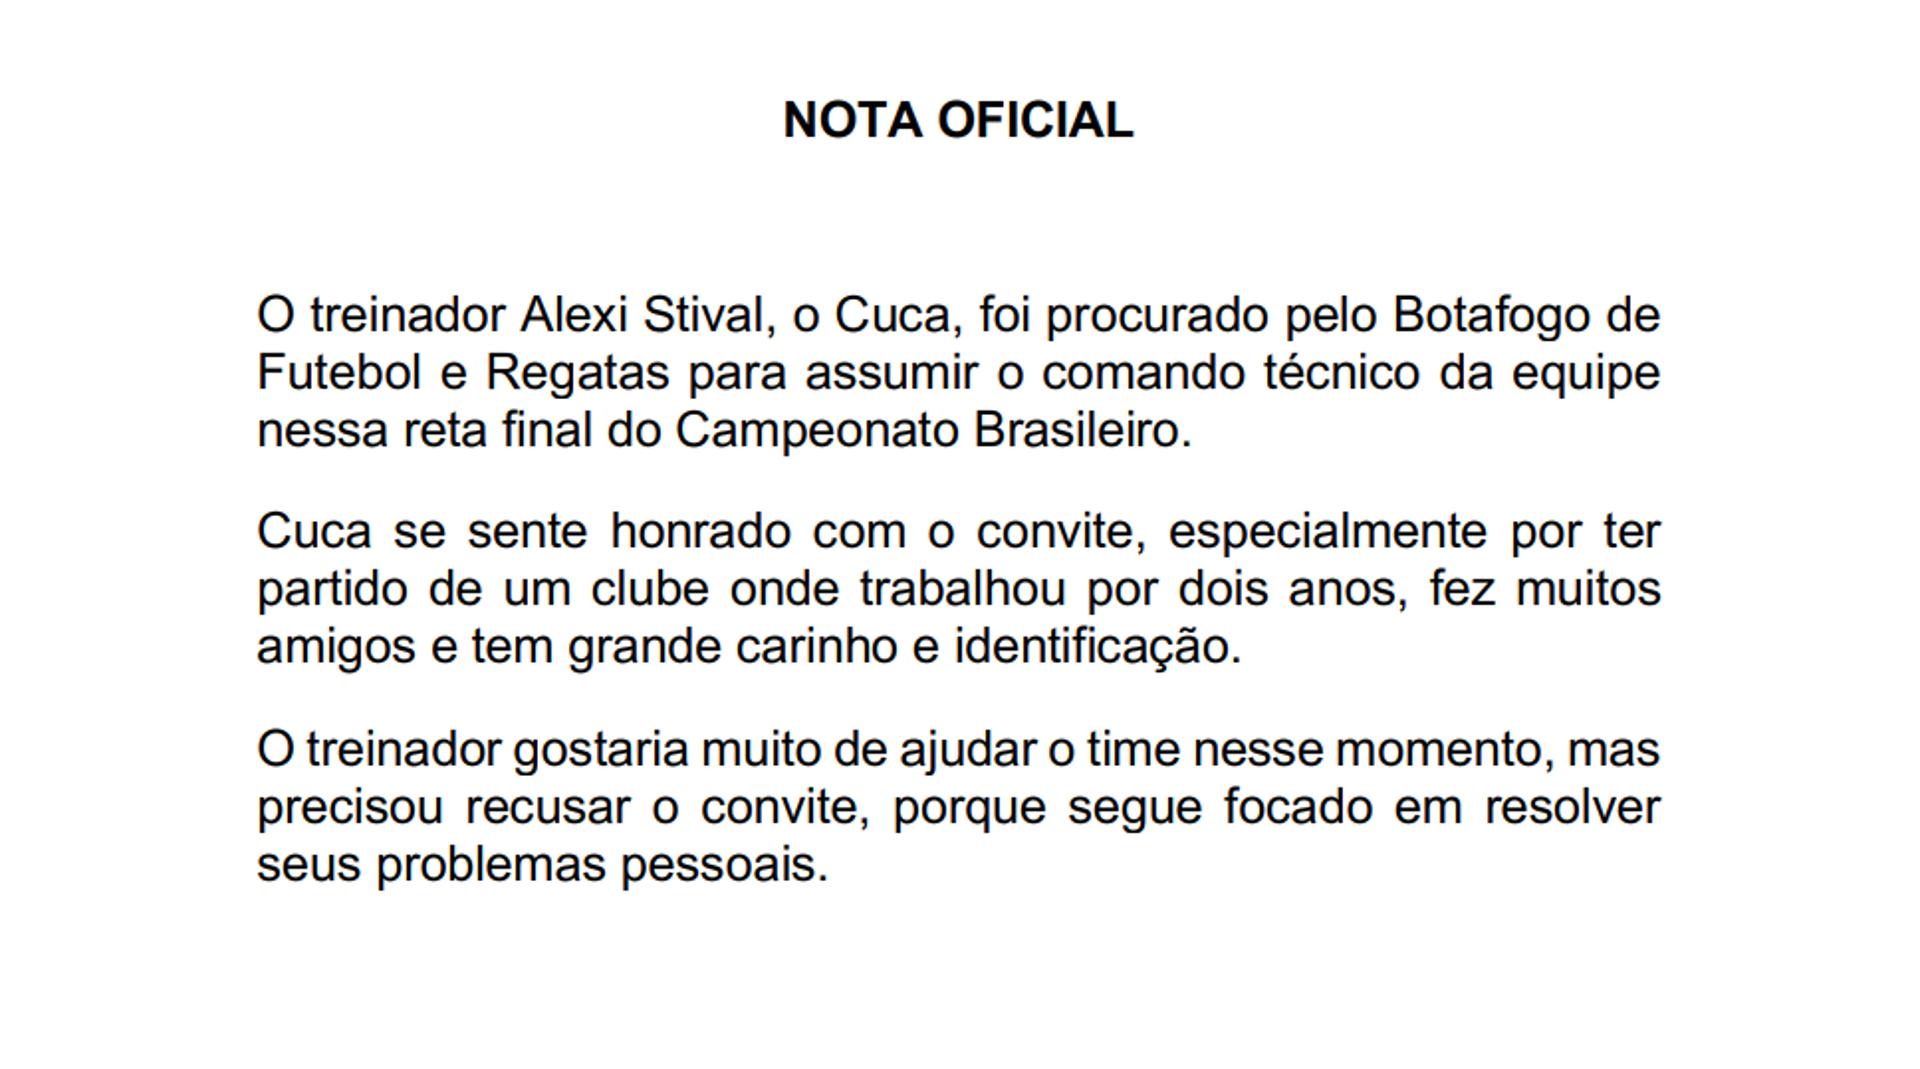 Nota Cuca sobre contato para treinar o Botafogo